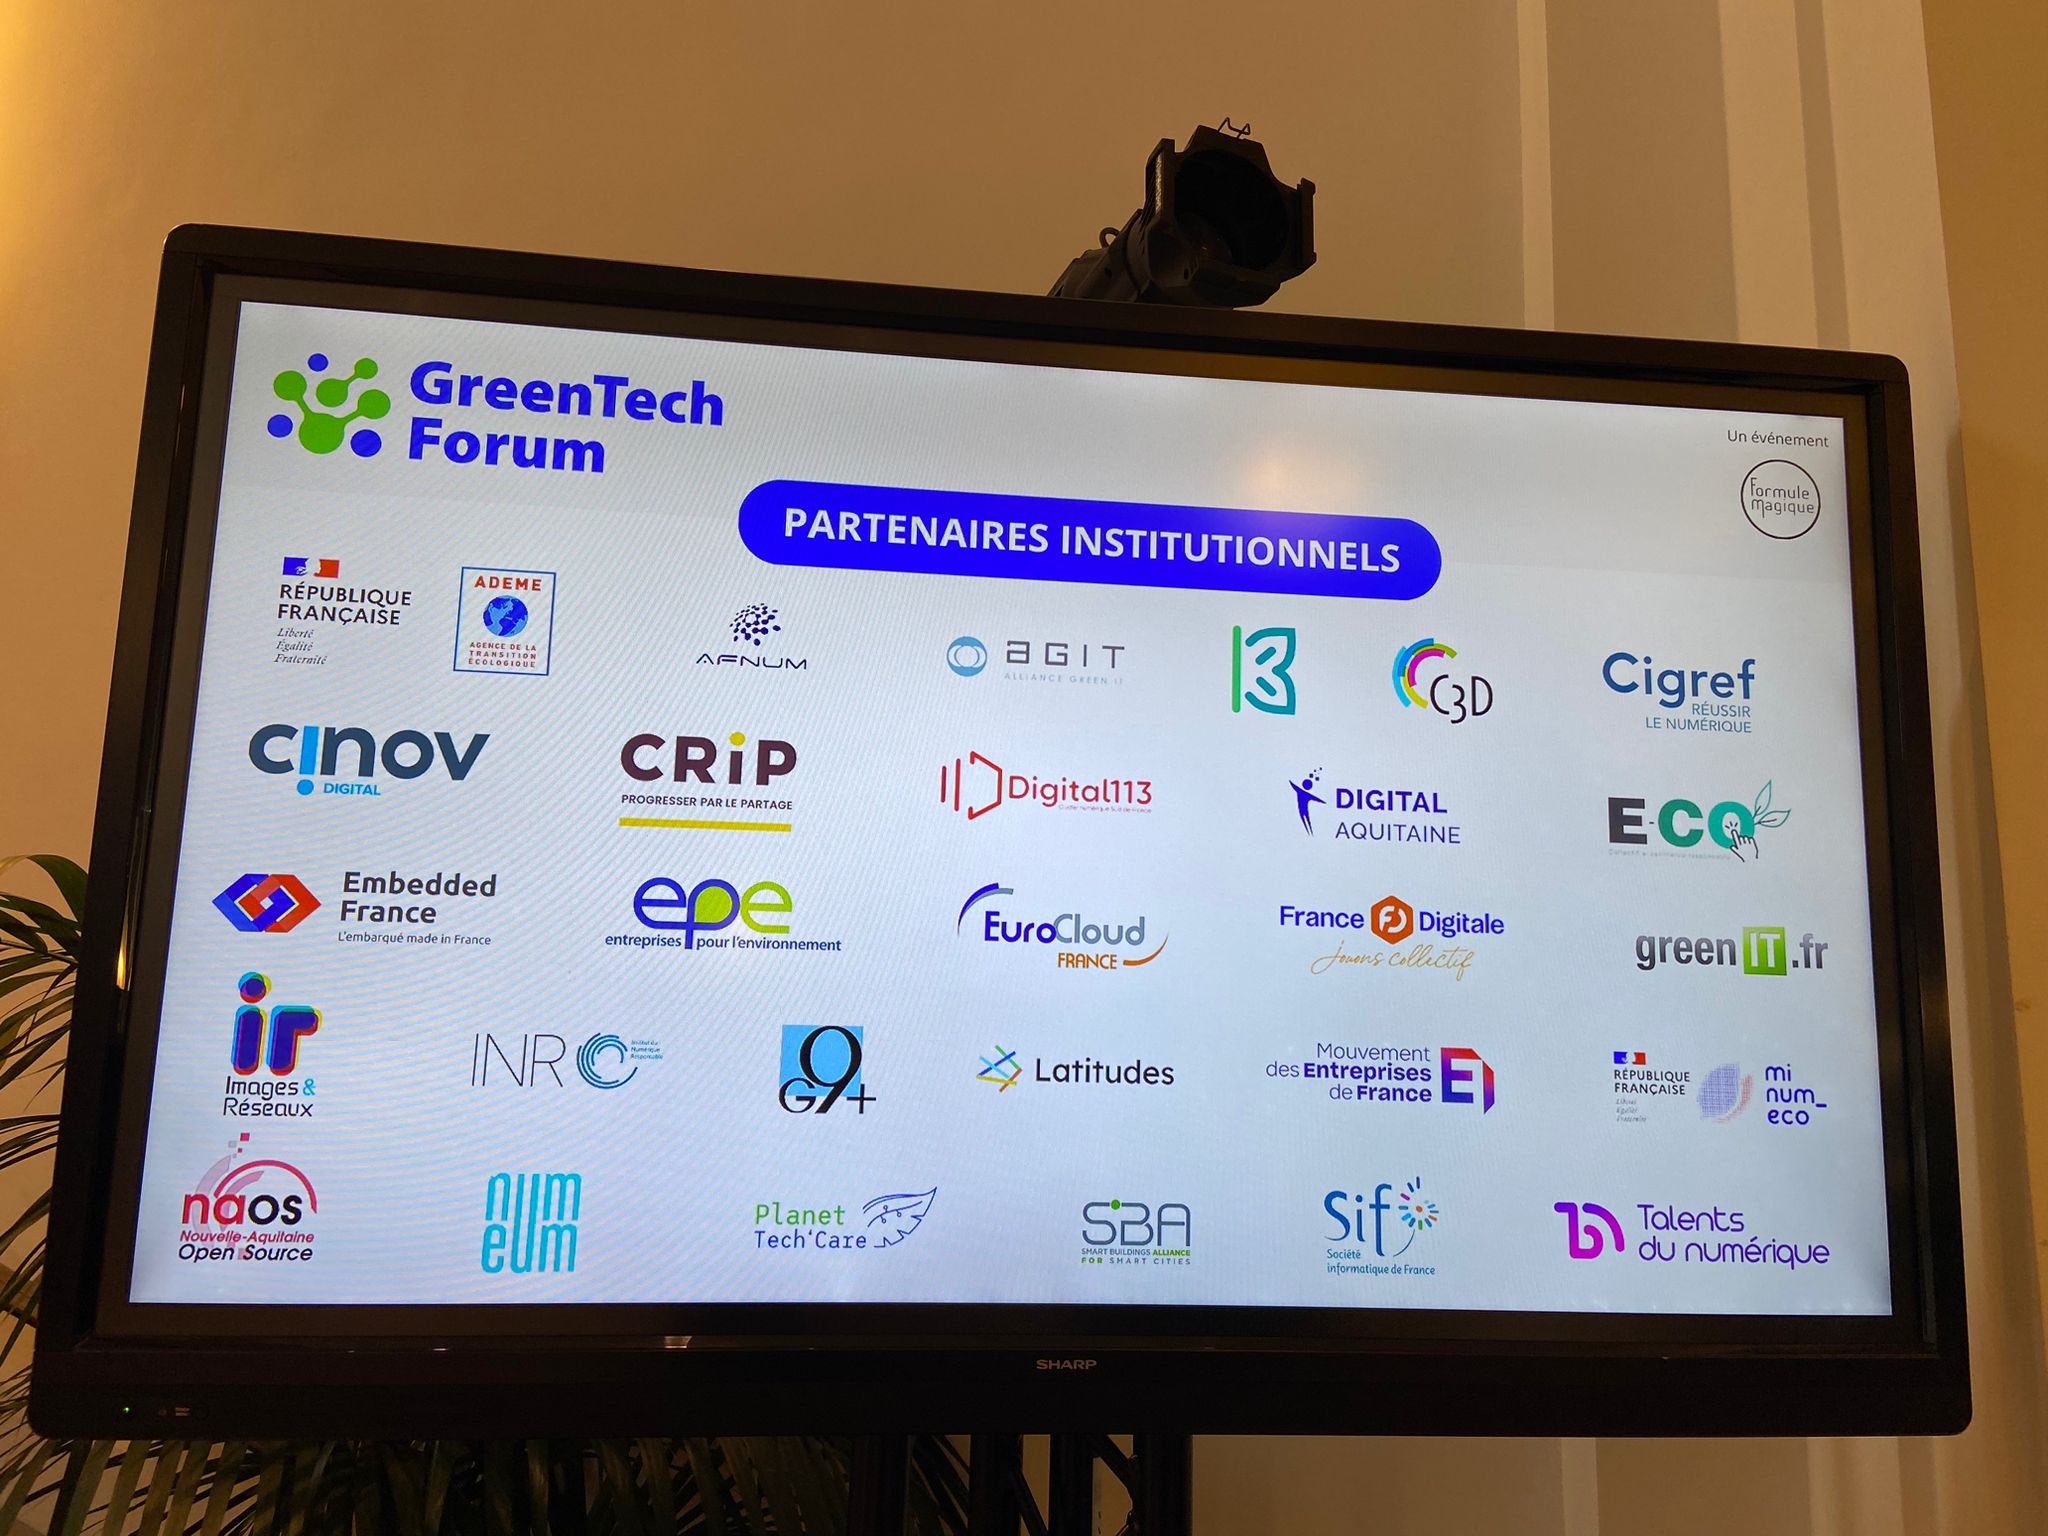 GreenTech Forum - partenaires